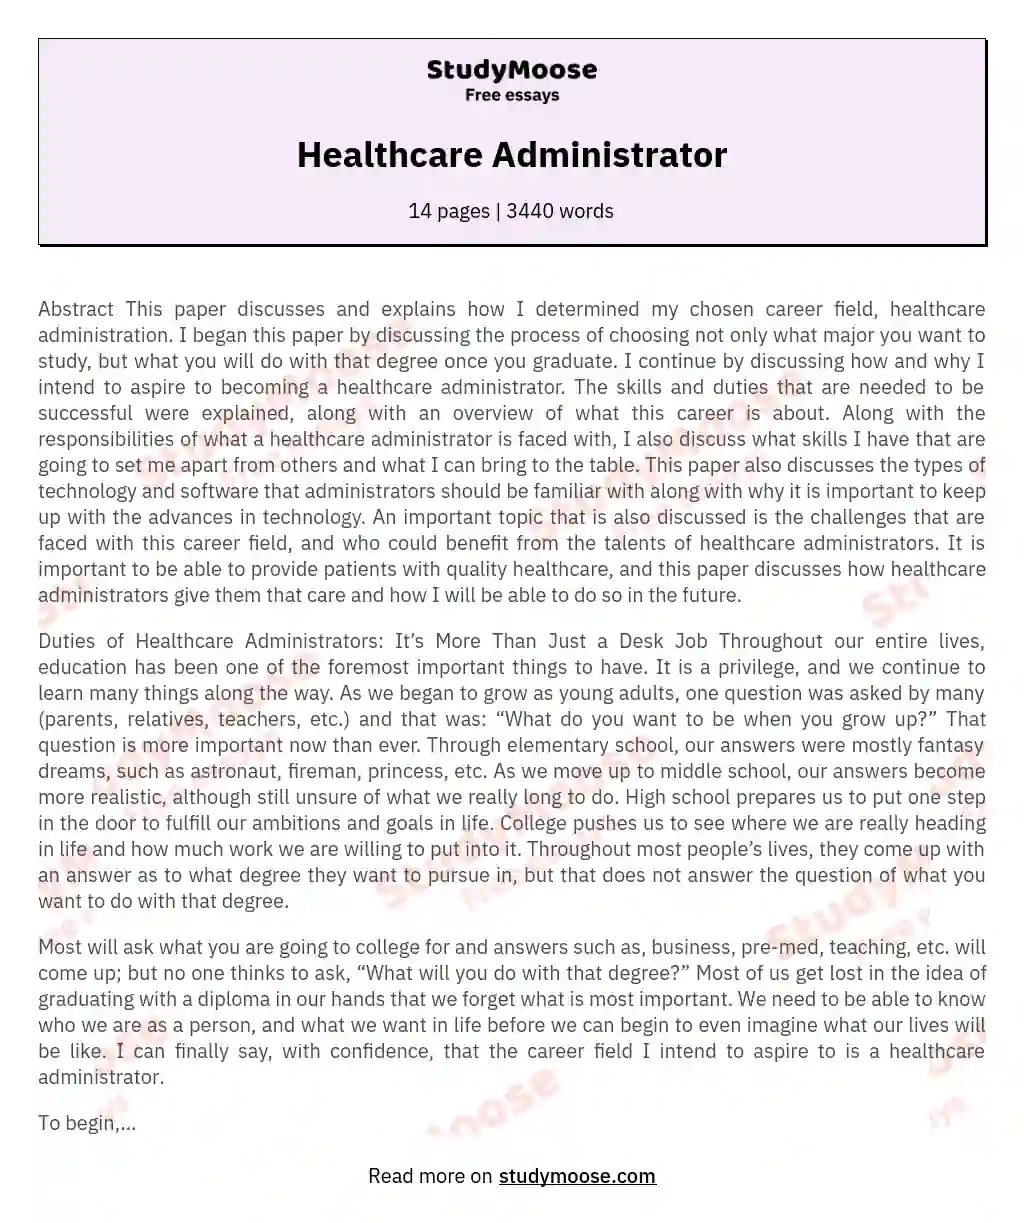 Healthcare Administrator essay